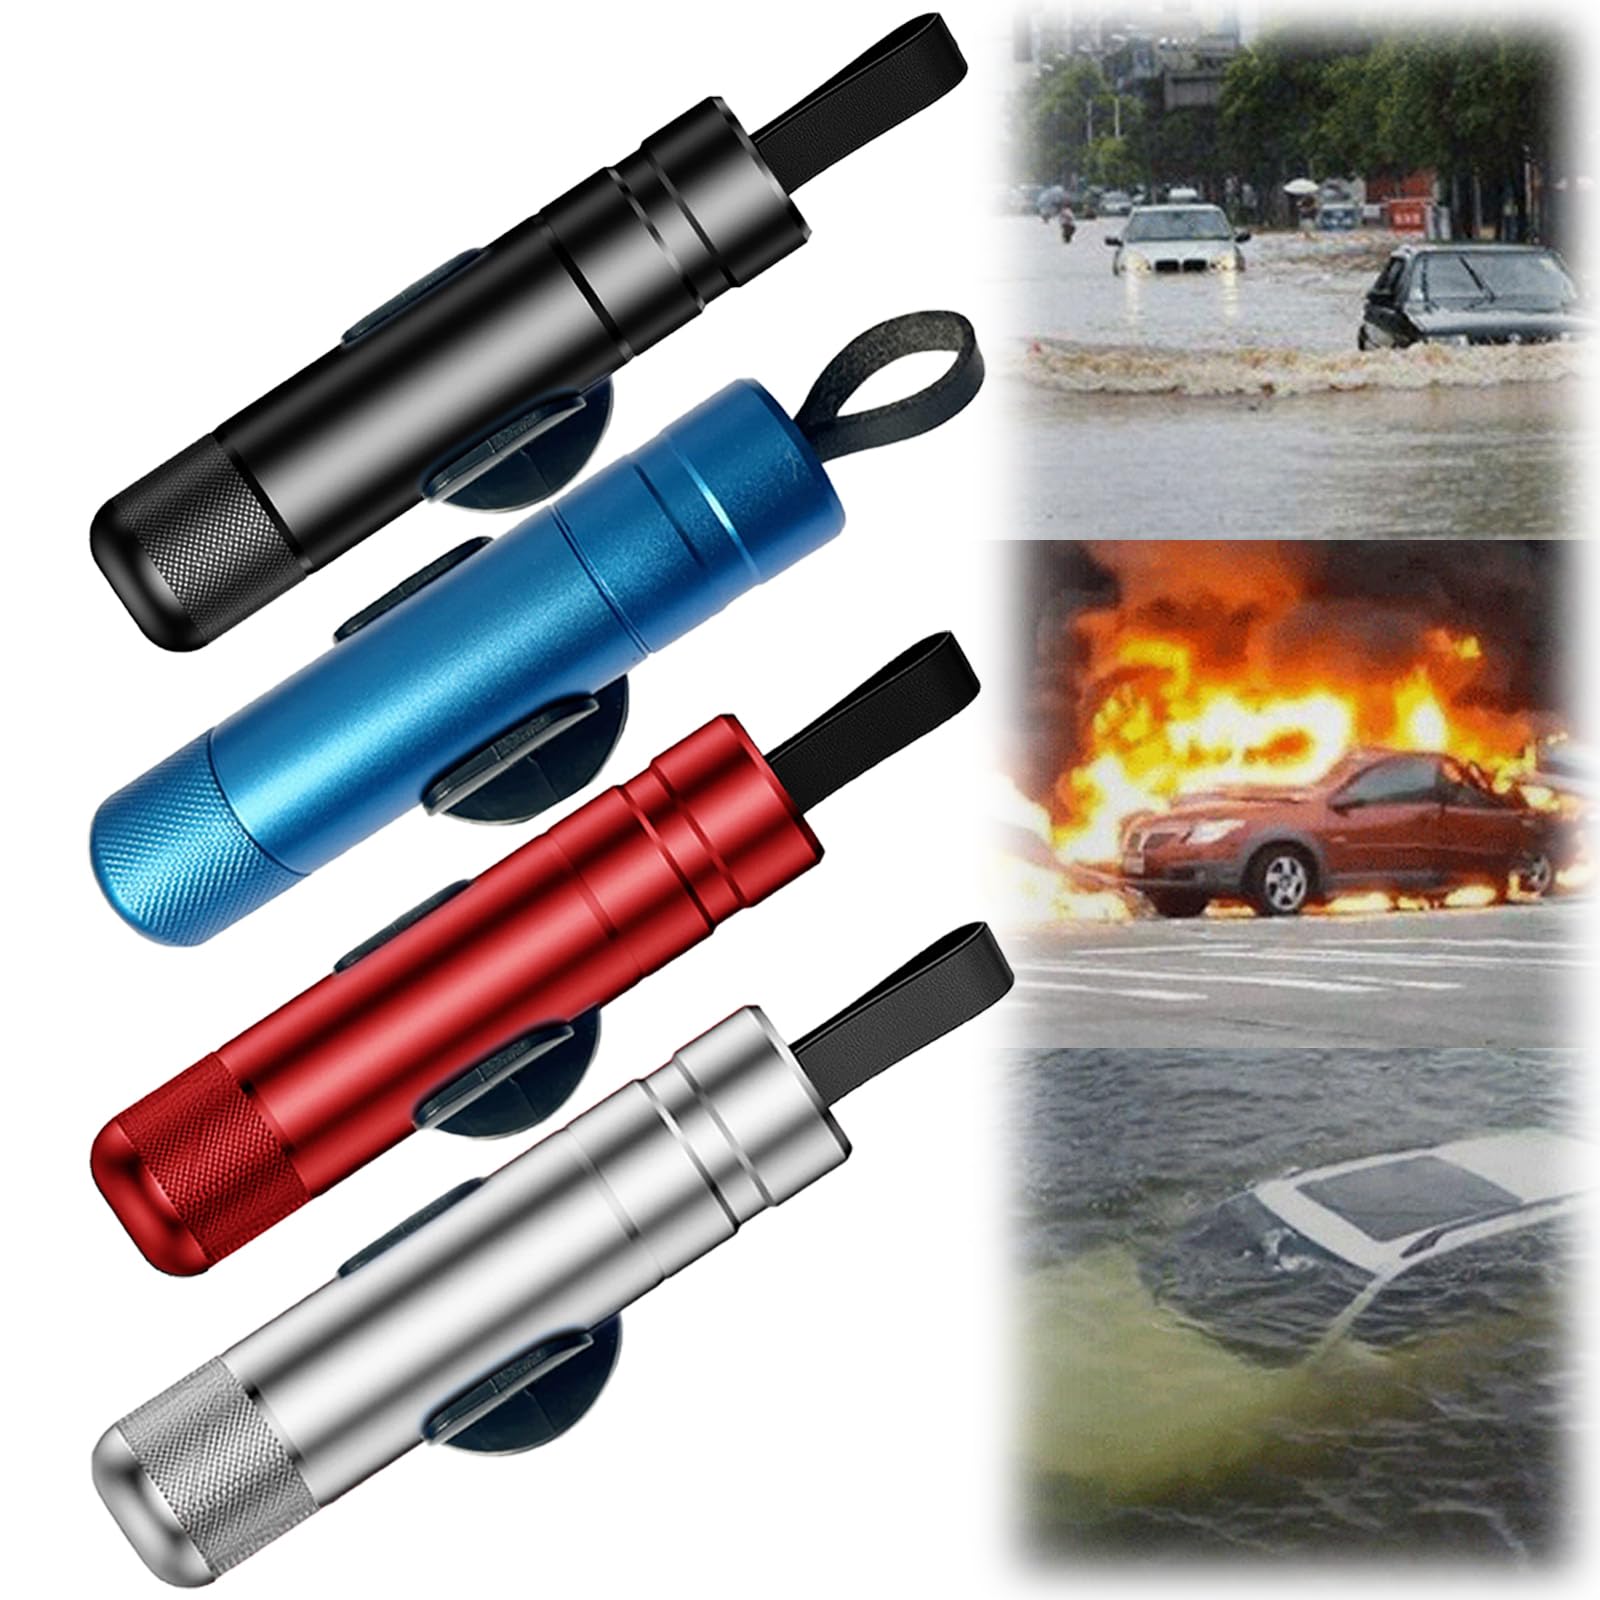 Safehammer, Safehammer Glass Breaker, Safehammer Car Window Breaker, Multi-Functional Car Escape Tools (4pcs) von Jeeeun